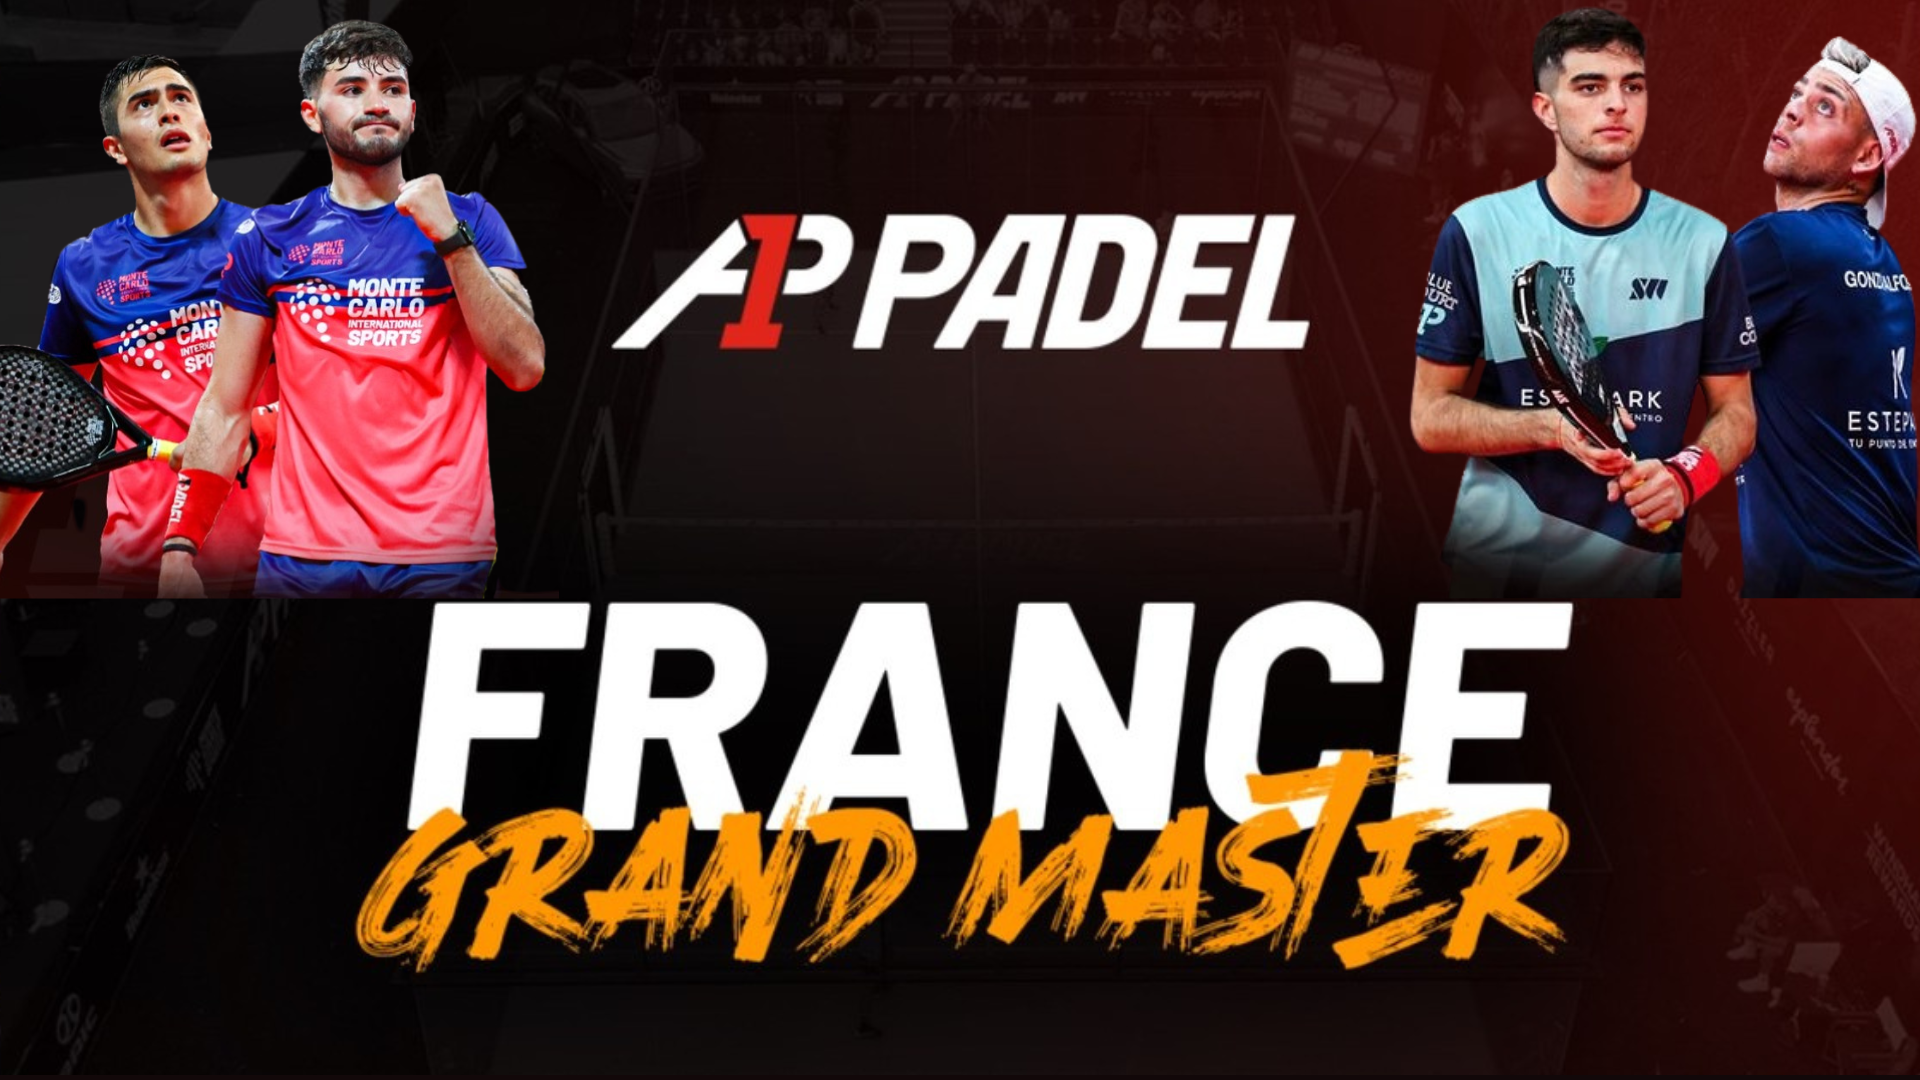 A1 Padel France Grand Master – De Pascual/Alfonso en finale contre Dal Bianco/Arce